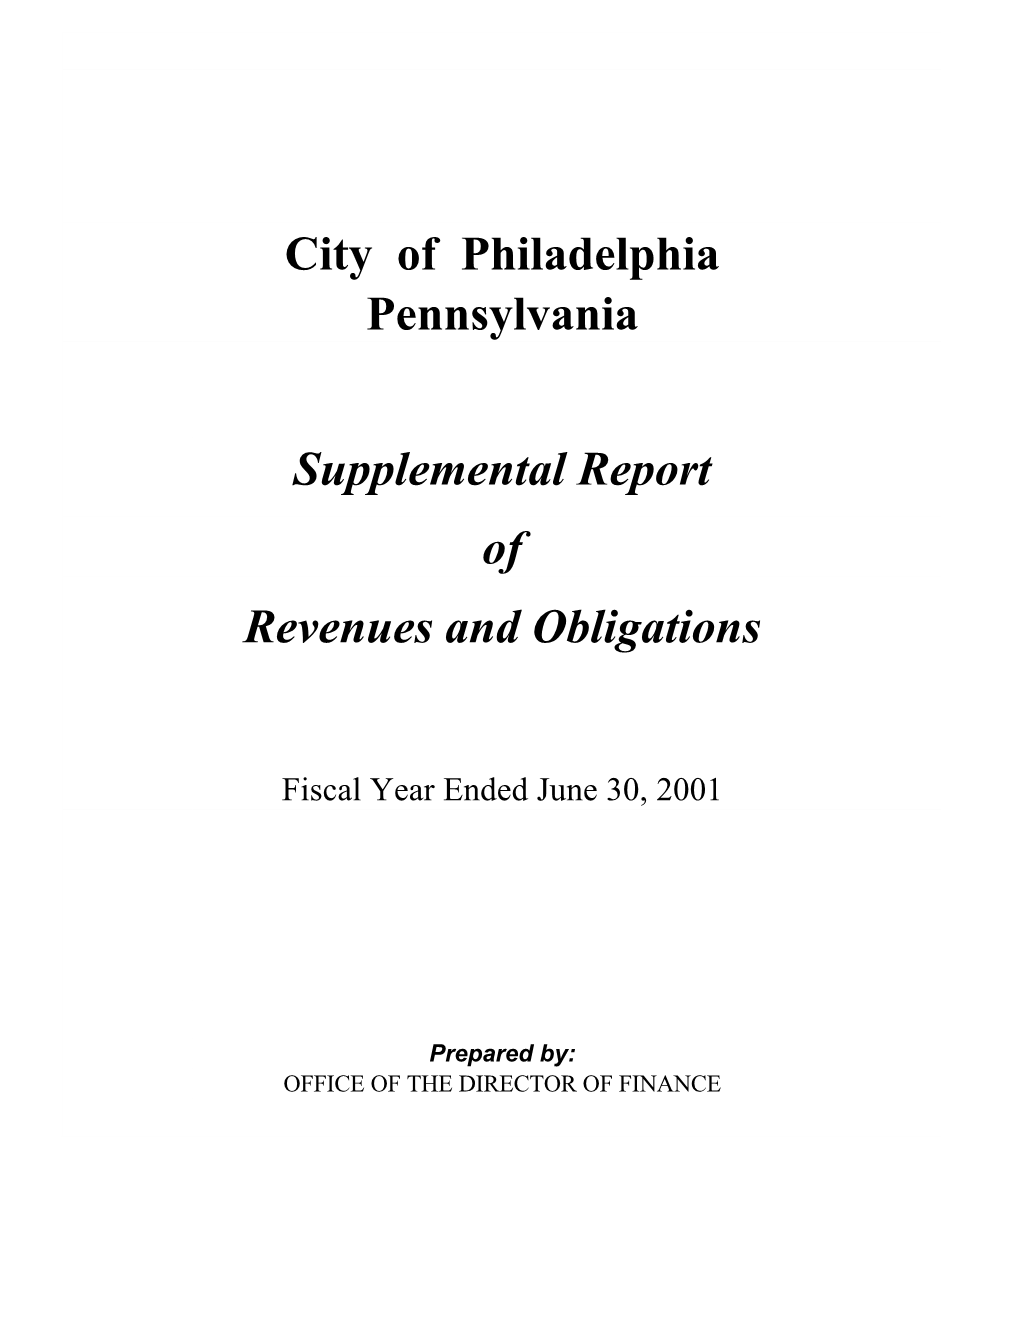 City of Philadelphia Pennsylvania Supplemental Report of Revenues